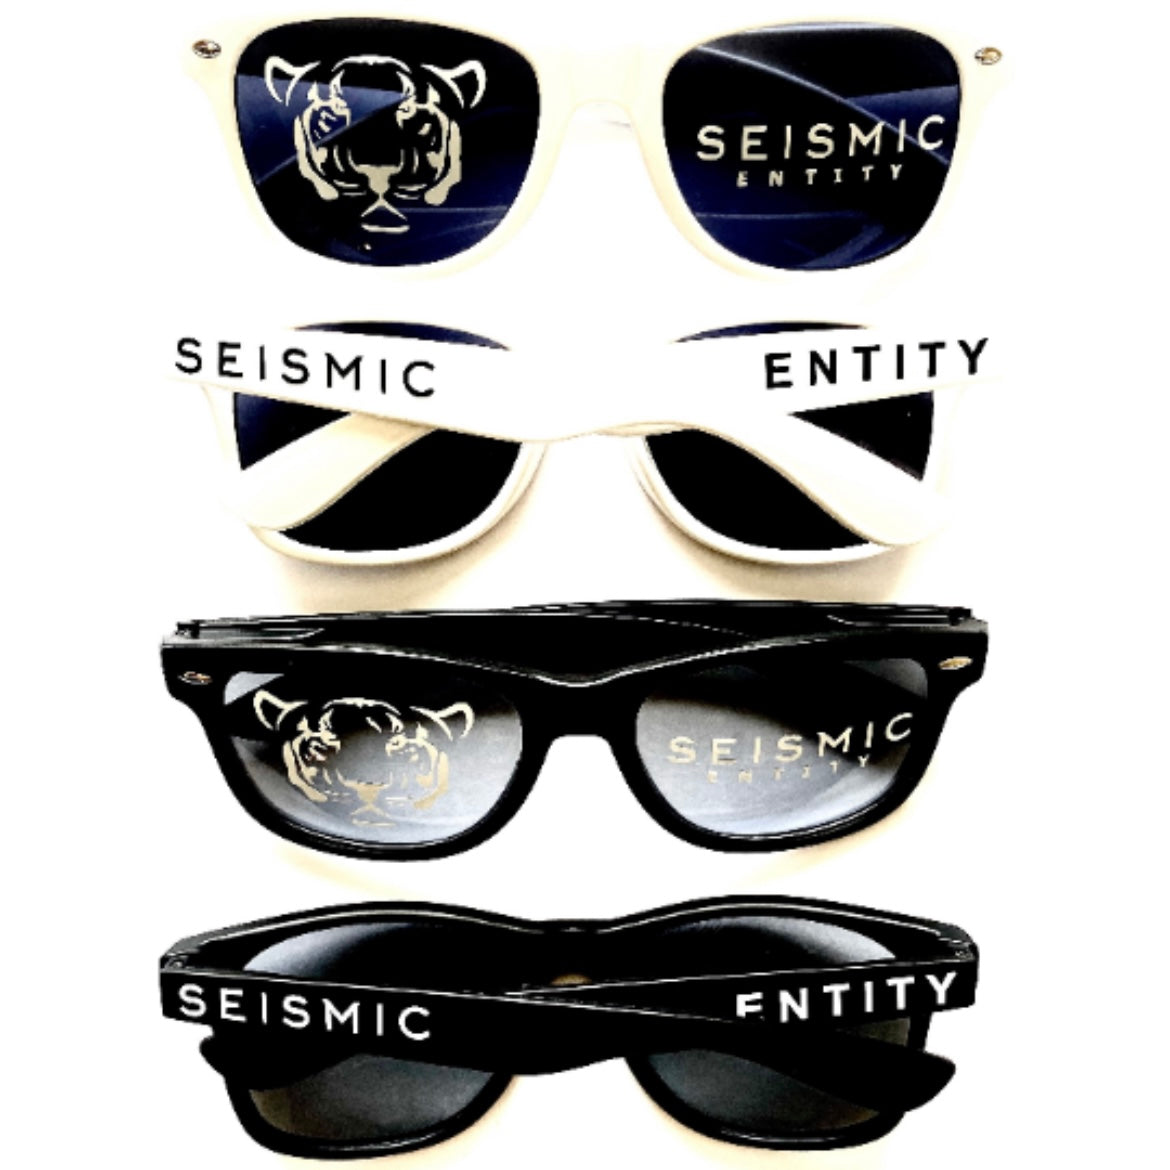 Seismic Entity Sunglasses